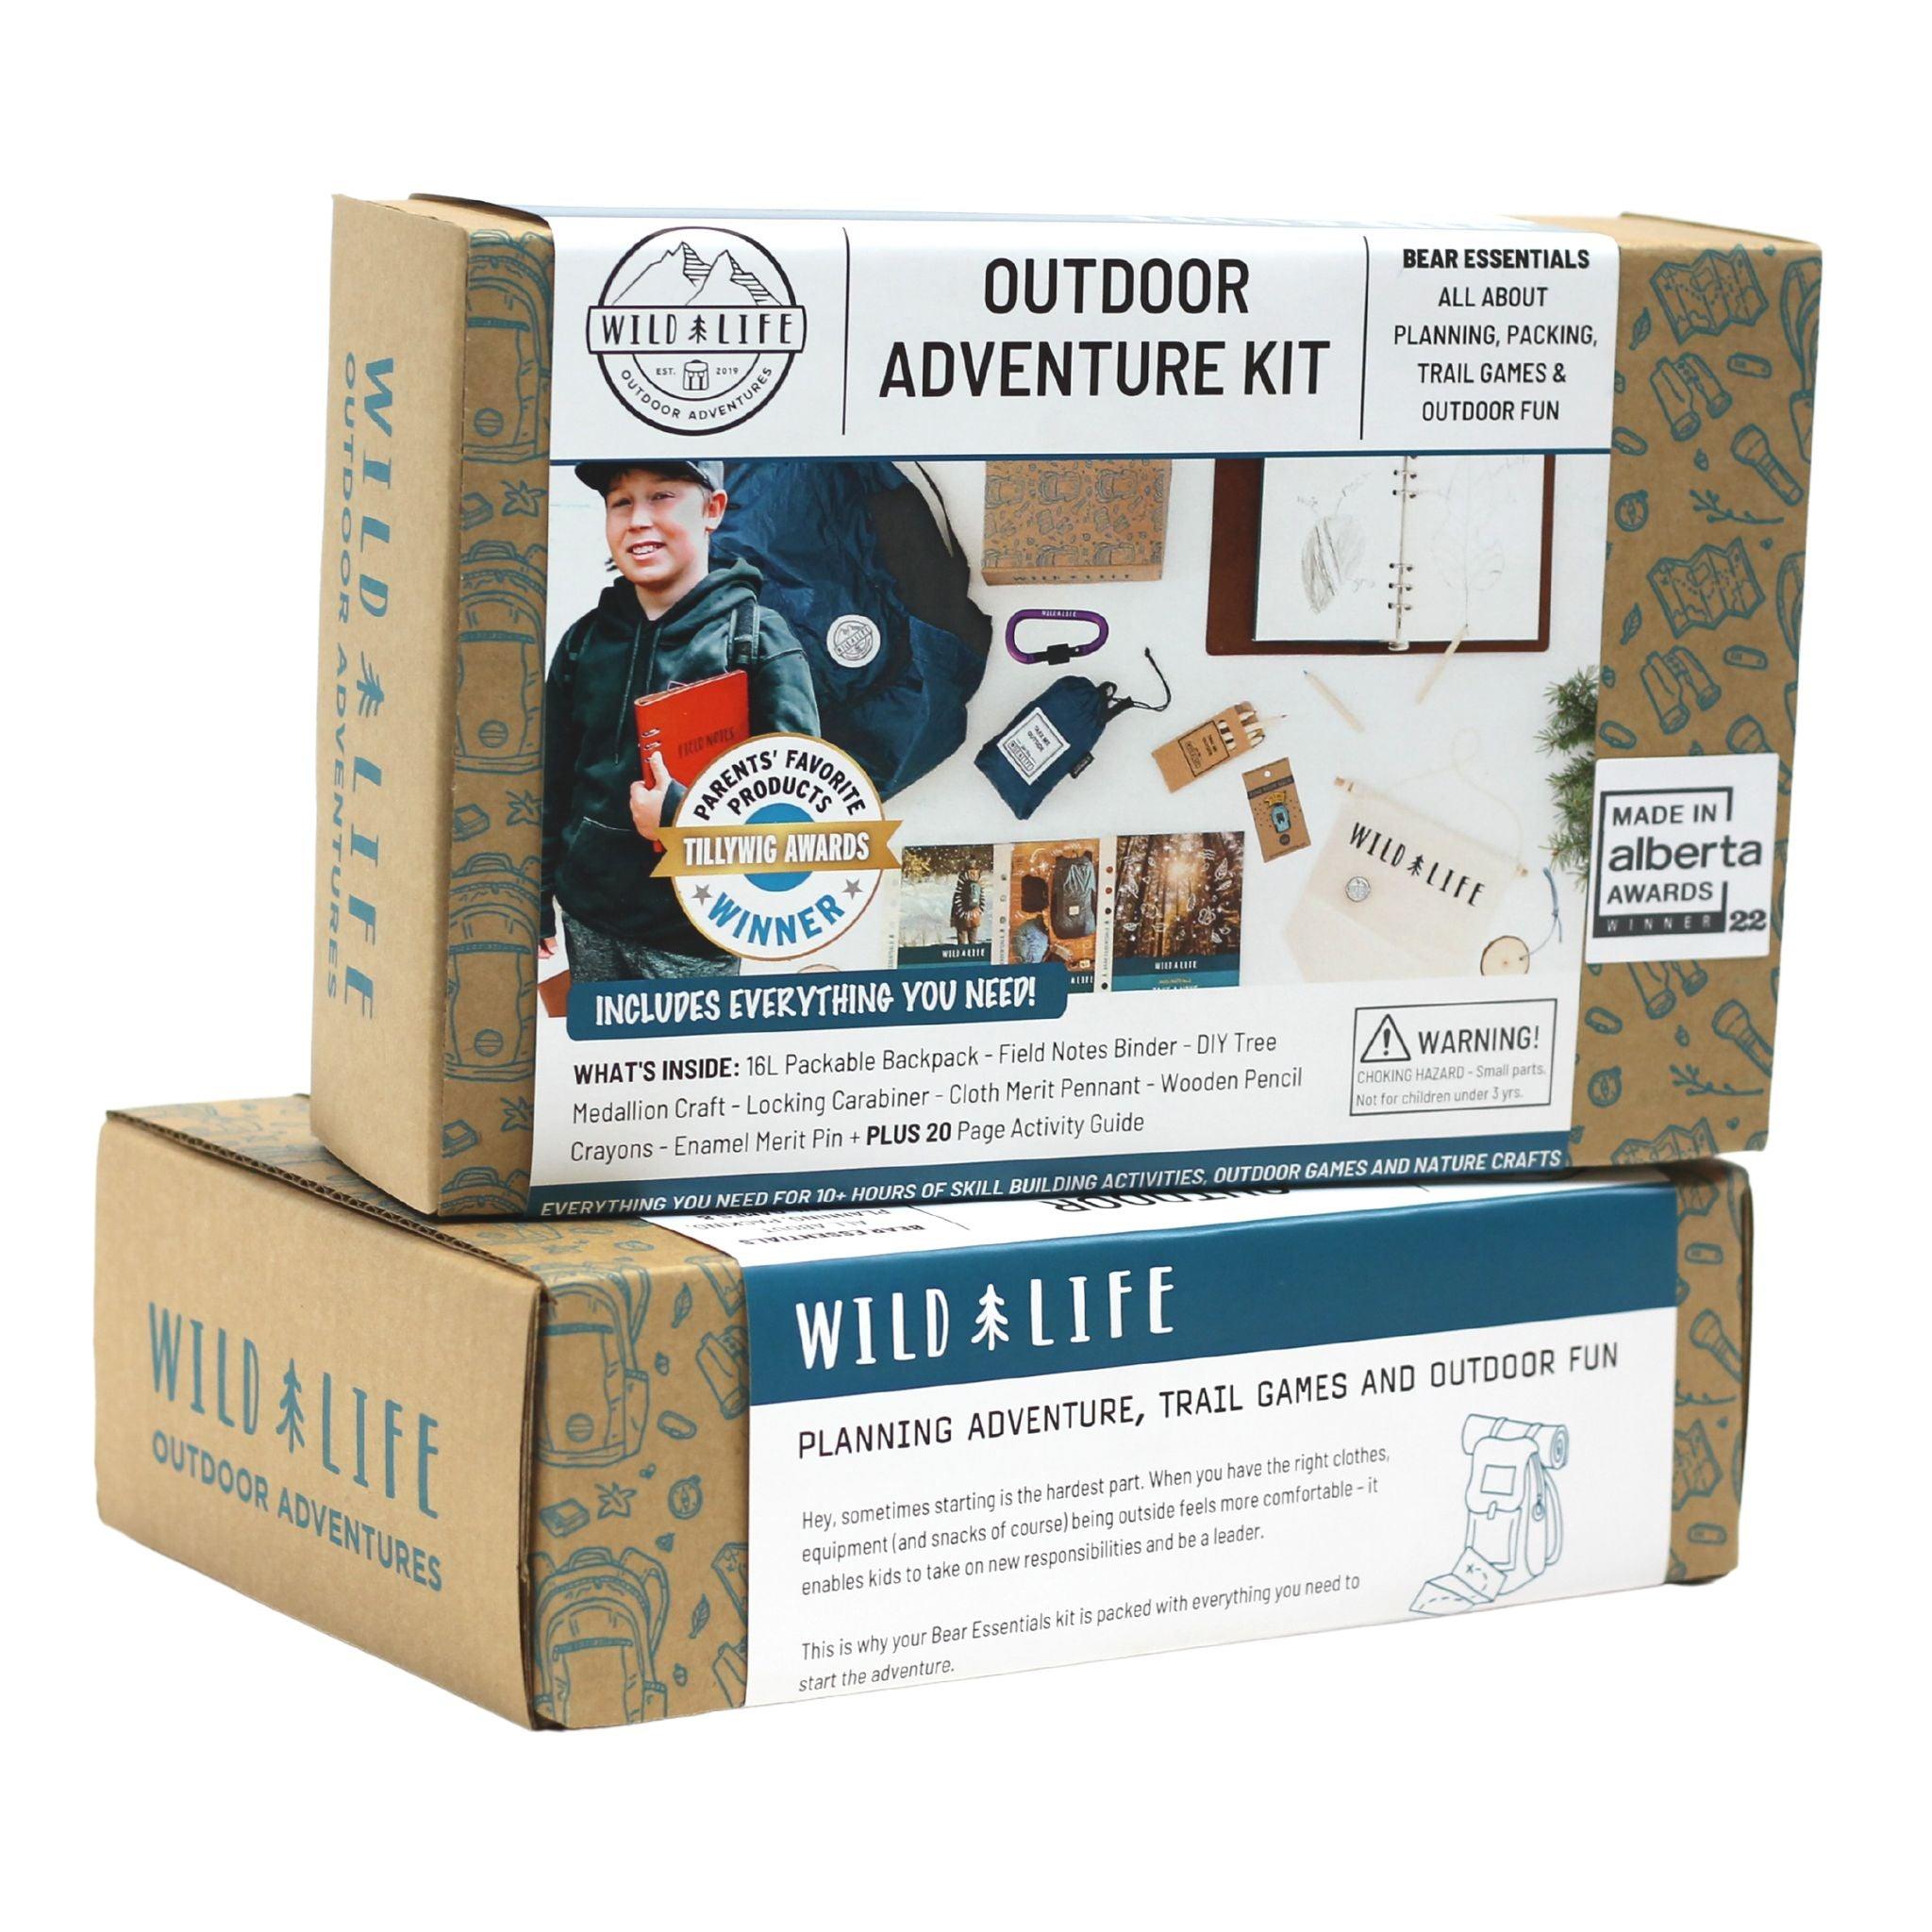 Bear Essentials Outdoor Adventure Kit